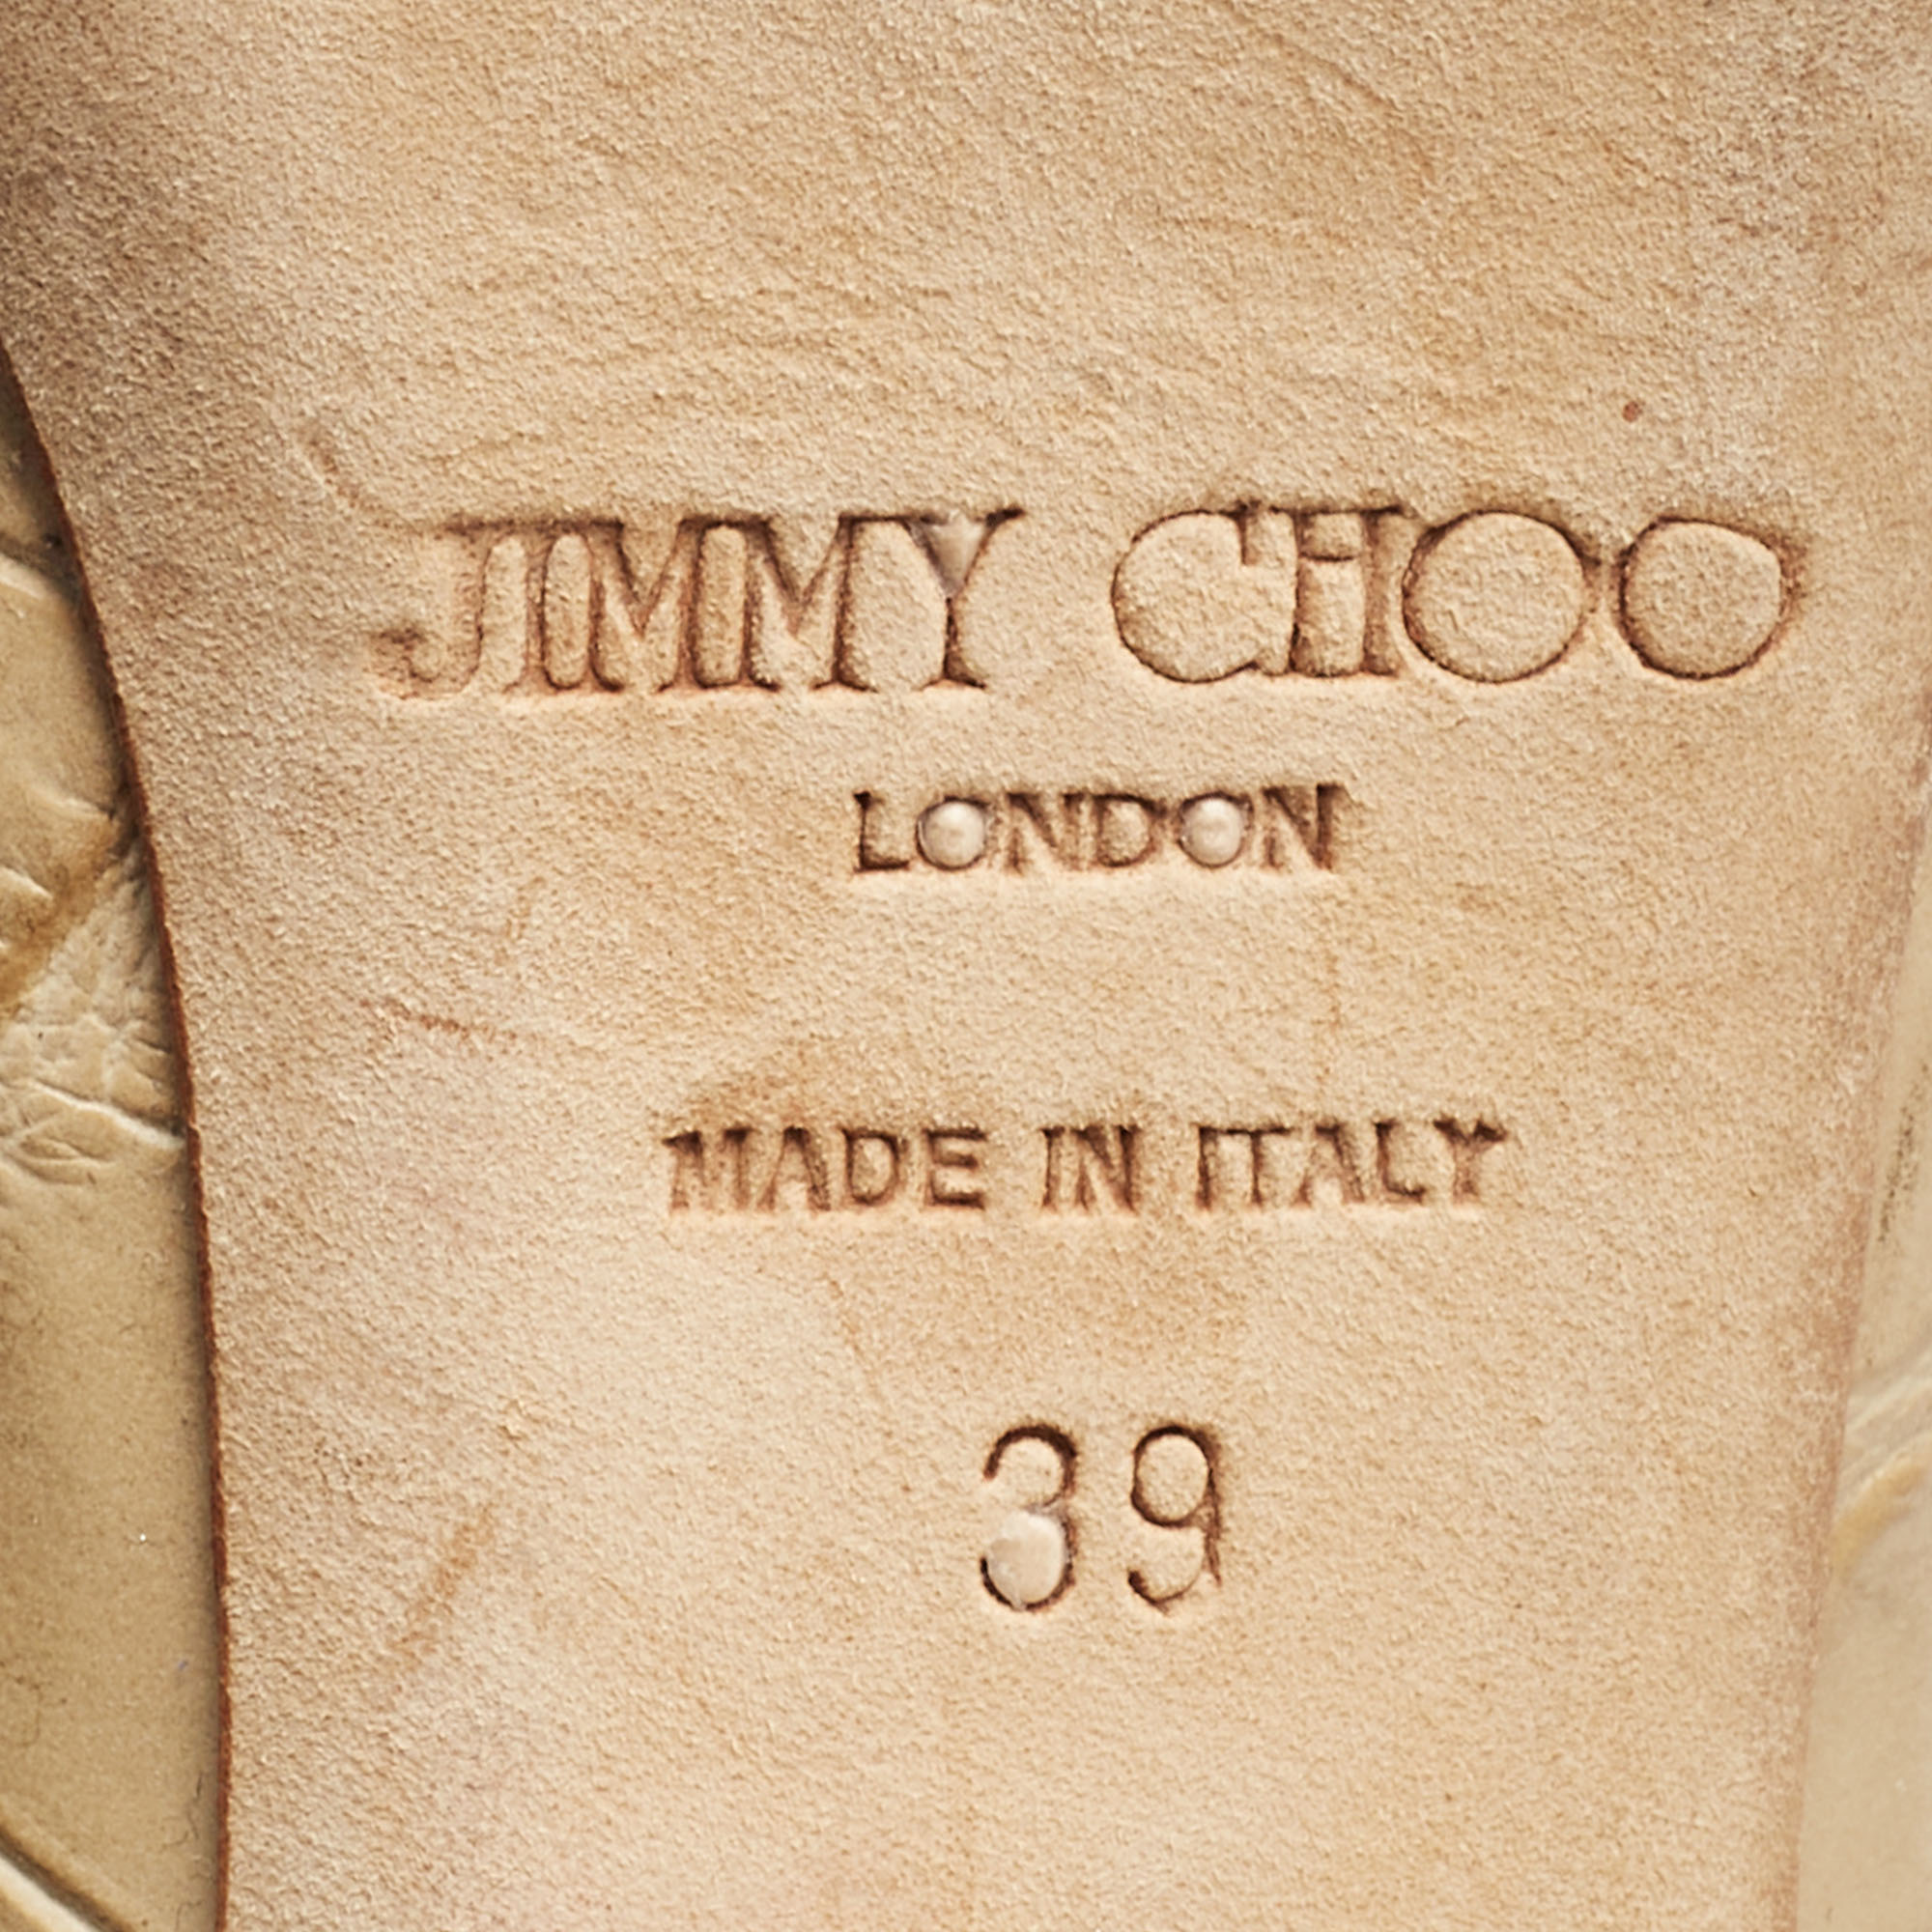 Jimmy Choo Olive Green Croc Embossed Leather Peep Toe Pumps Size 39